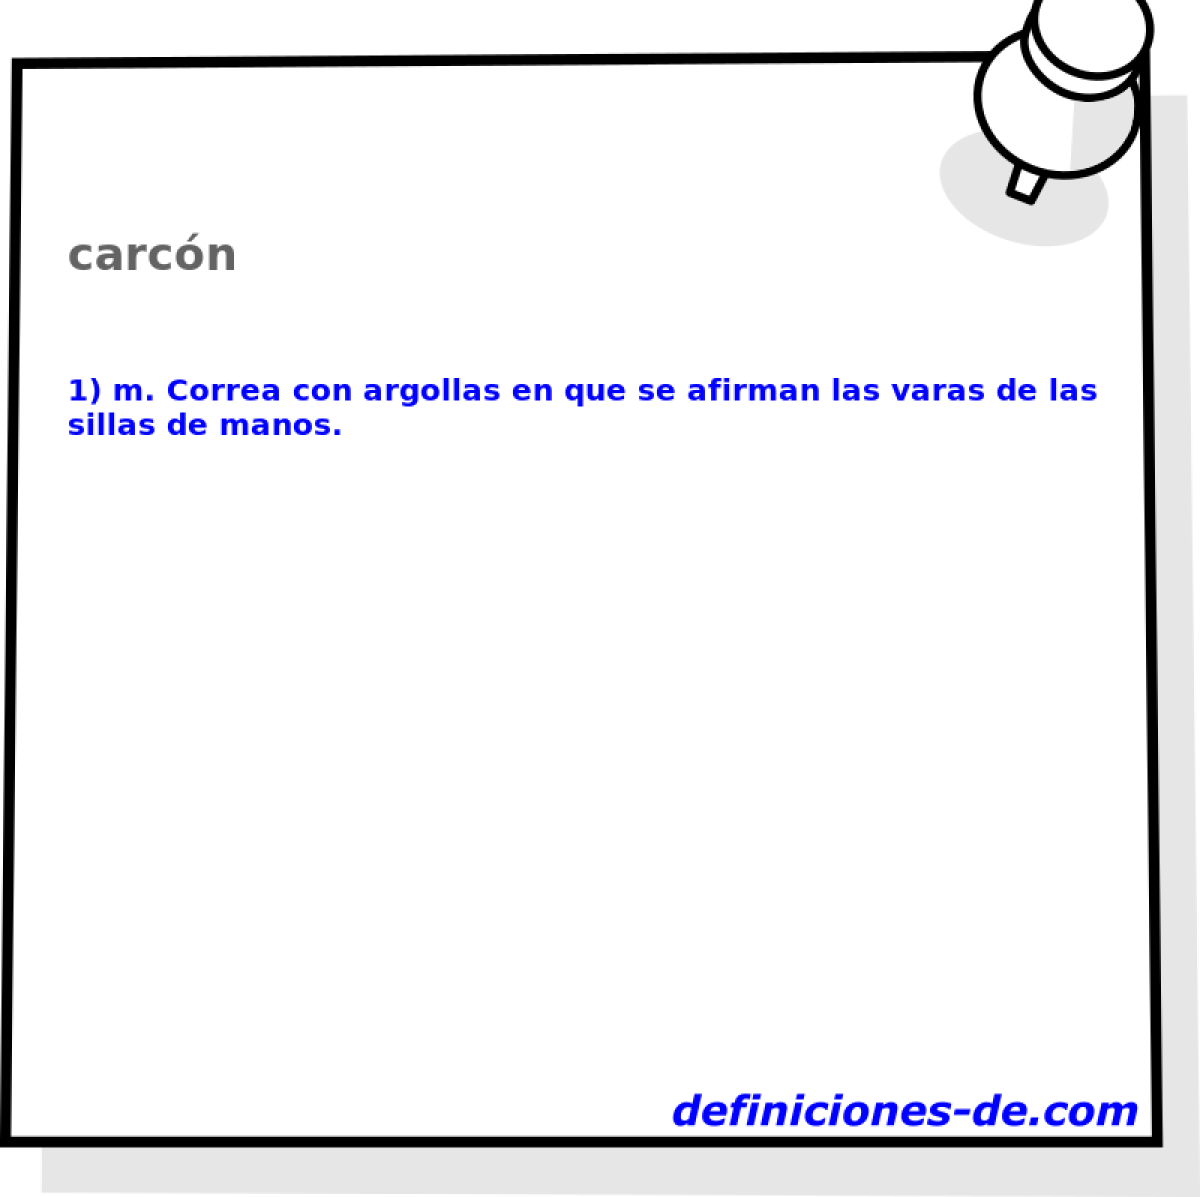 carcn 